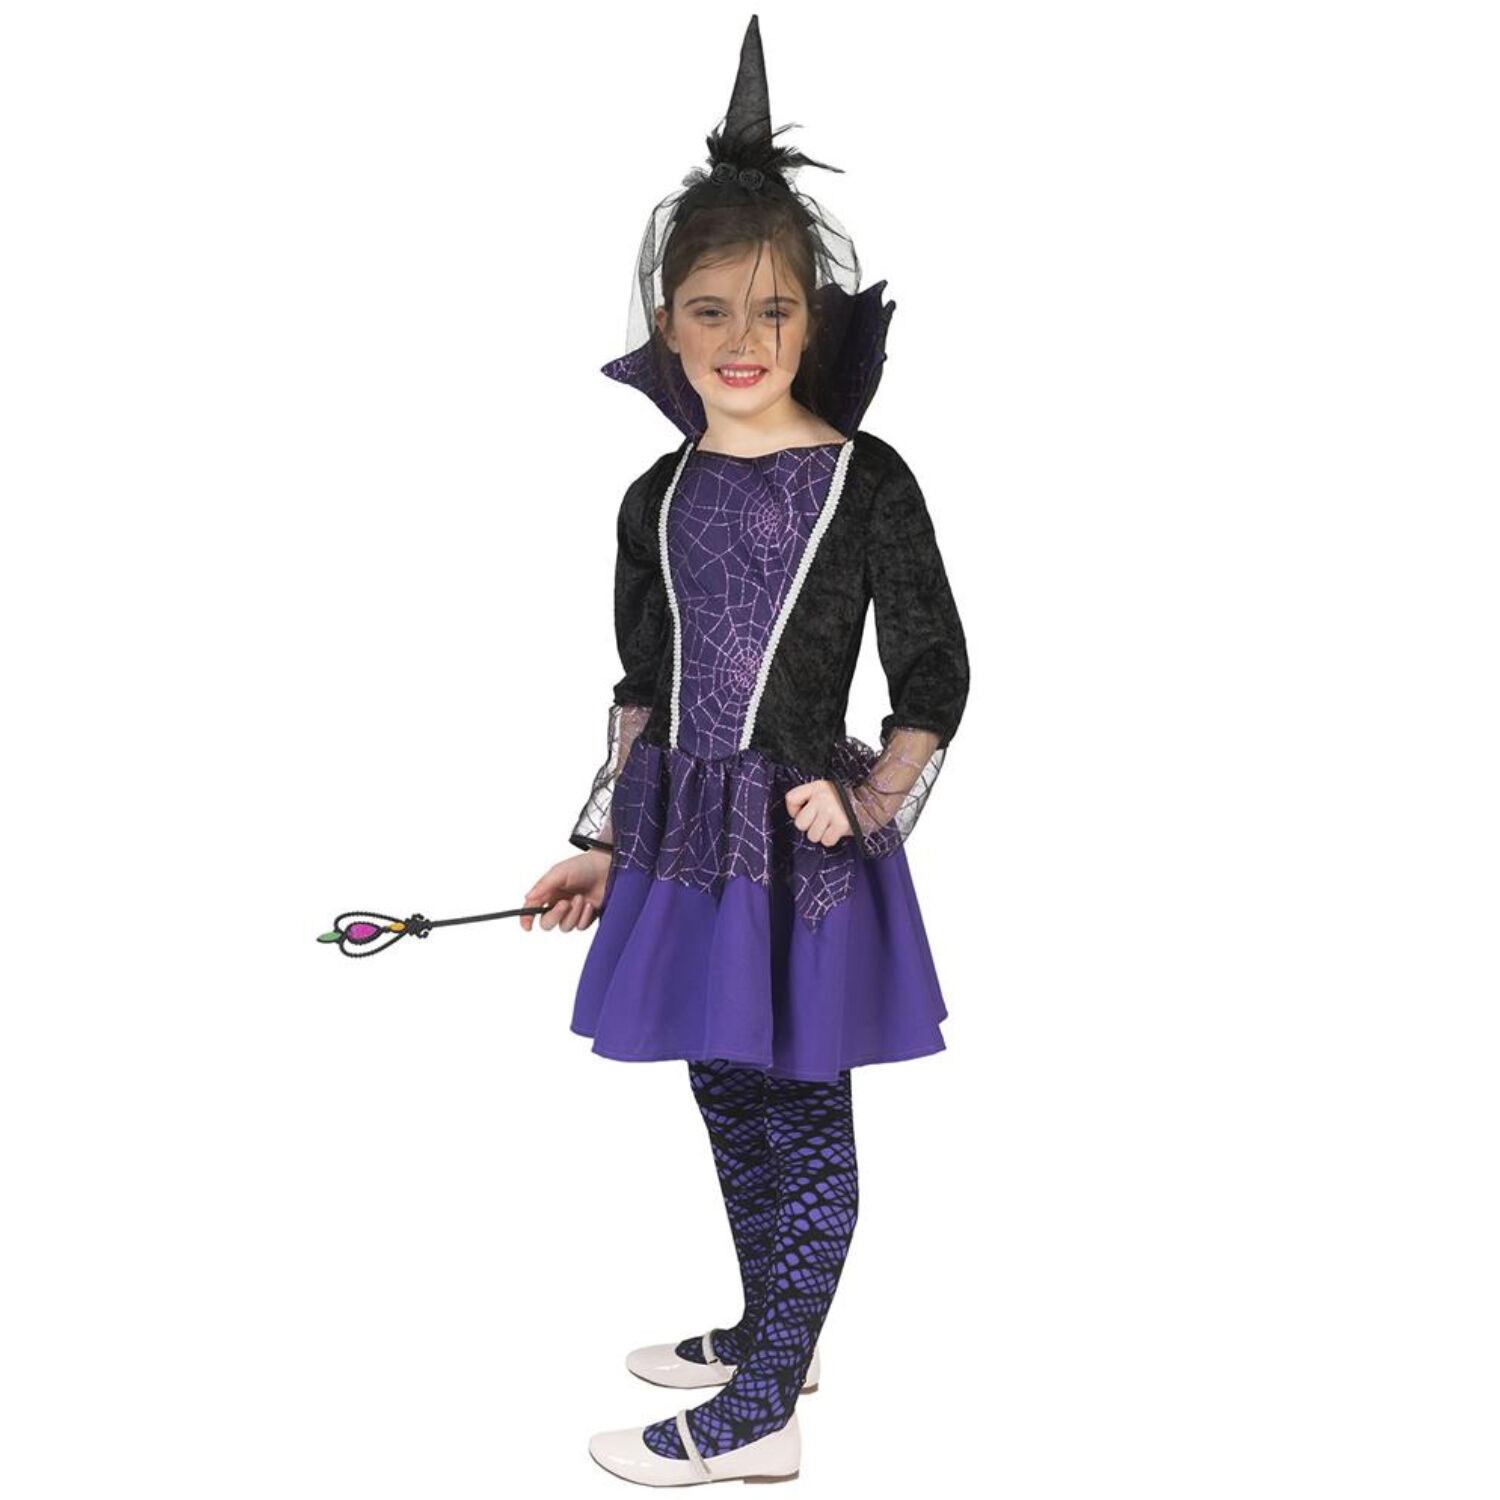 NEU Kinder-Kostüm Vampir-Kleid Vaduvo mit Stehkragen, Gr. 116 Bild 2